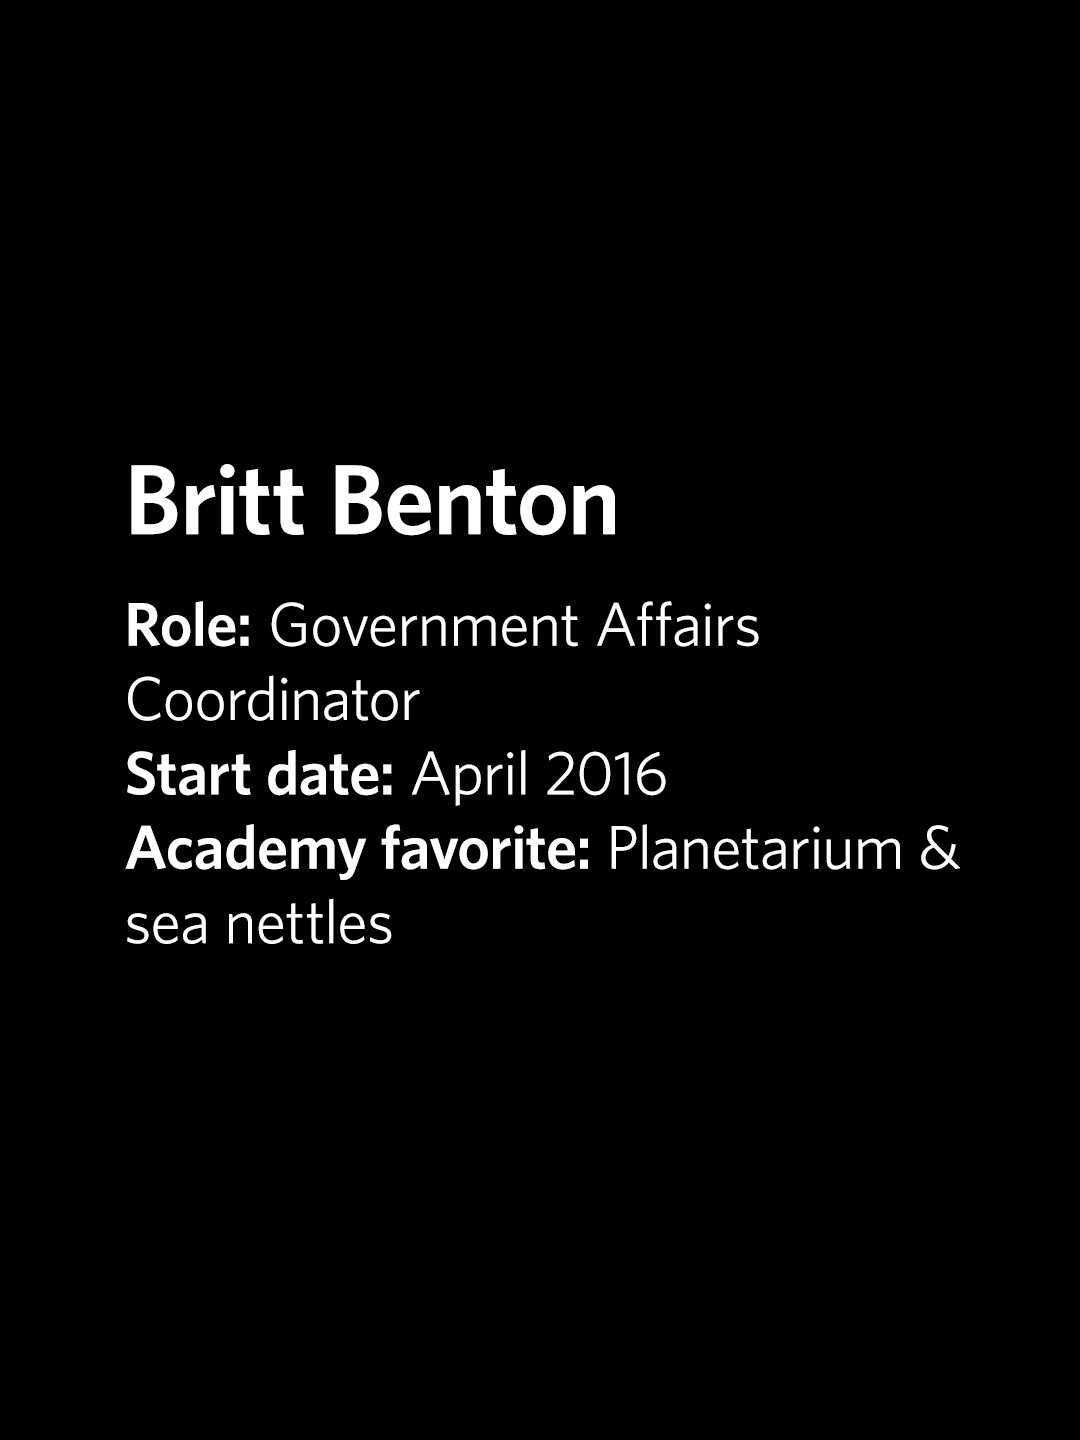 Britt Benton, Government Affairs Coordinator, started at Academy April 2016, favorites are planetarium and sea nettles